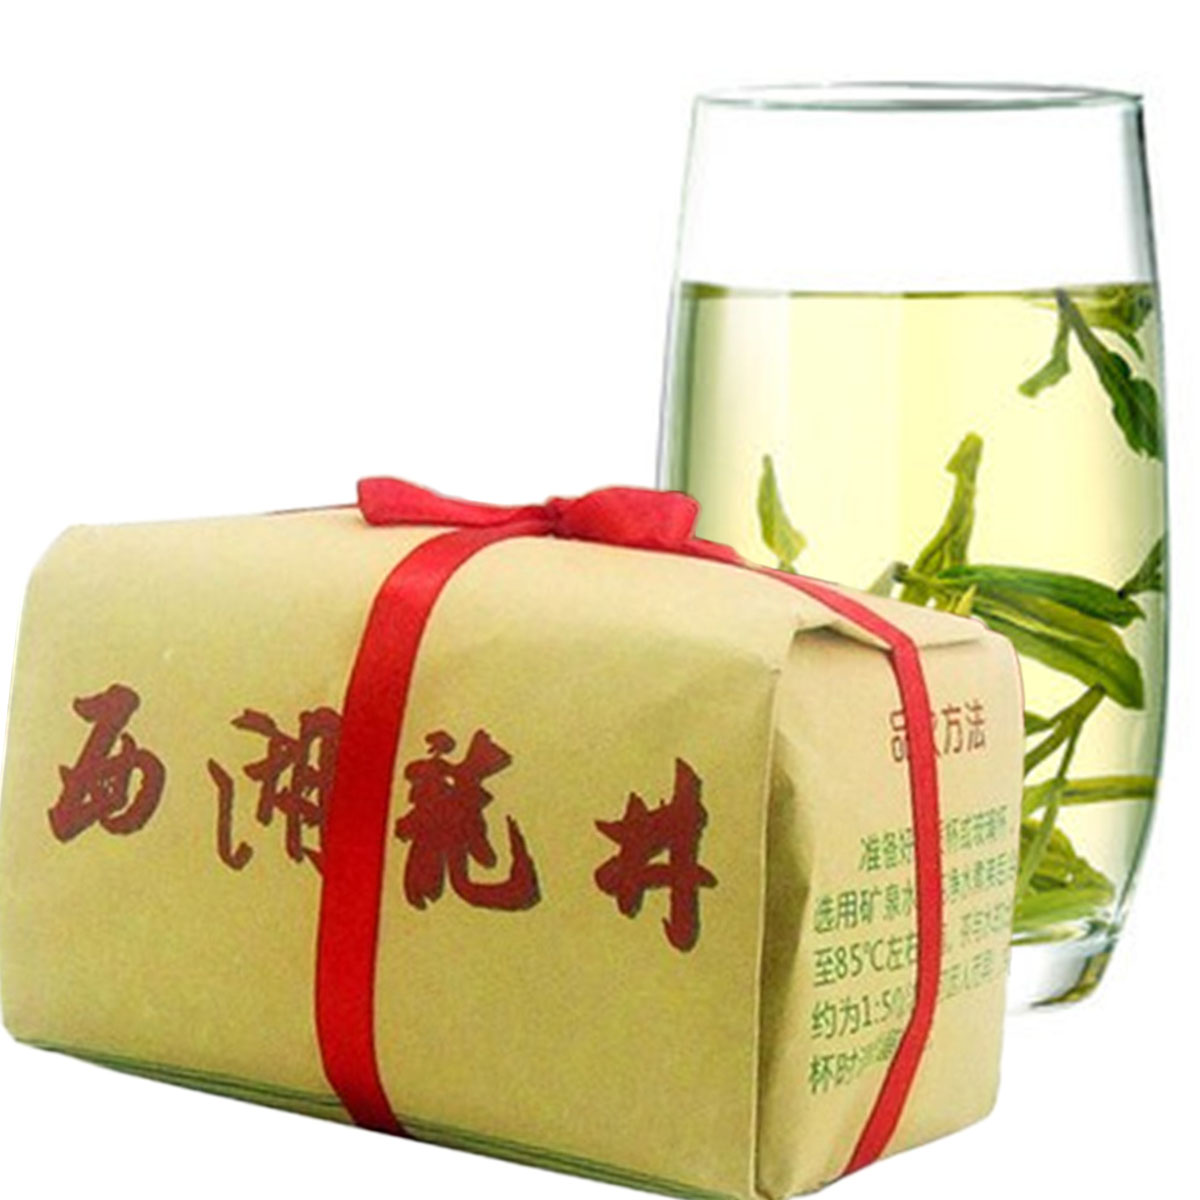 

500g Chinese Organic Green tea West Lake Longjing dragon well raw tea Classic packaging Health Care New Spring tae vert Food Factory Direct